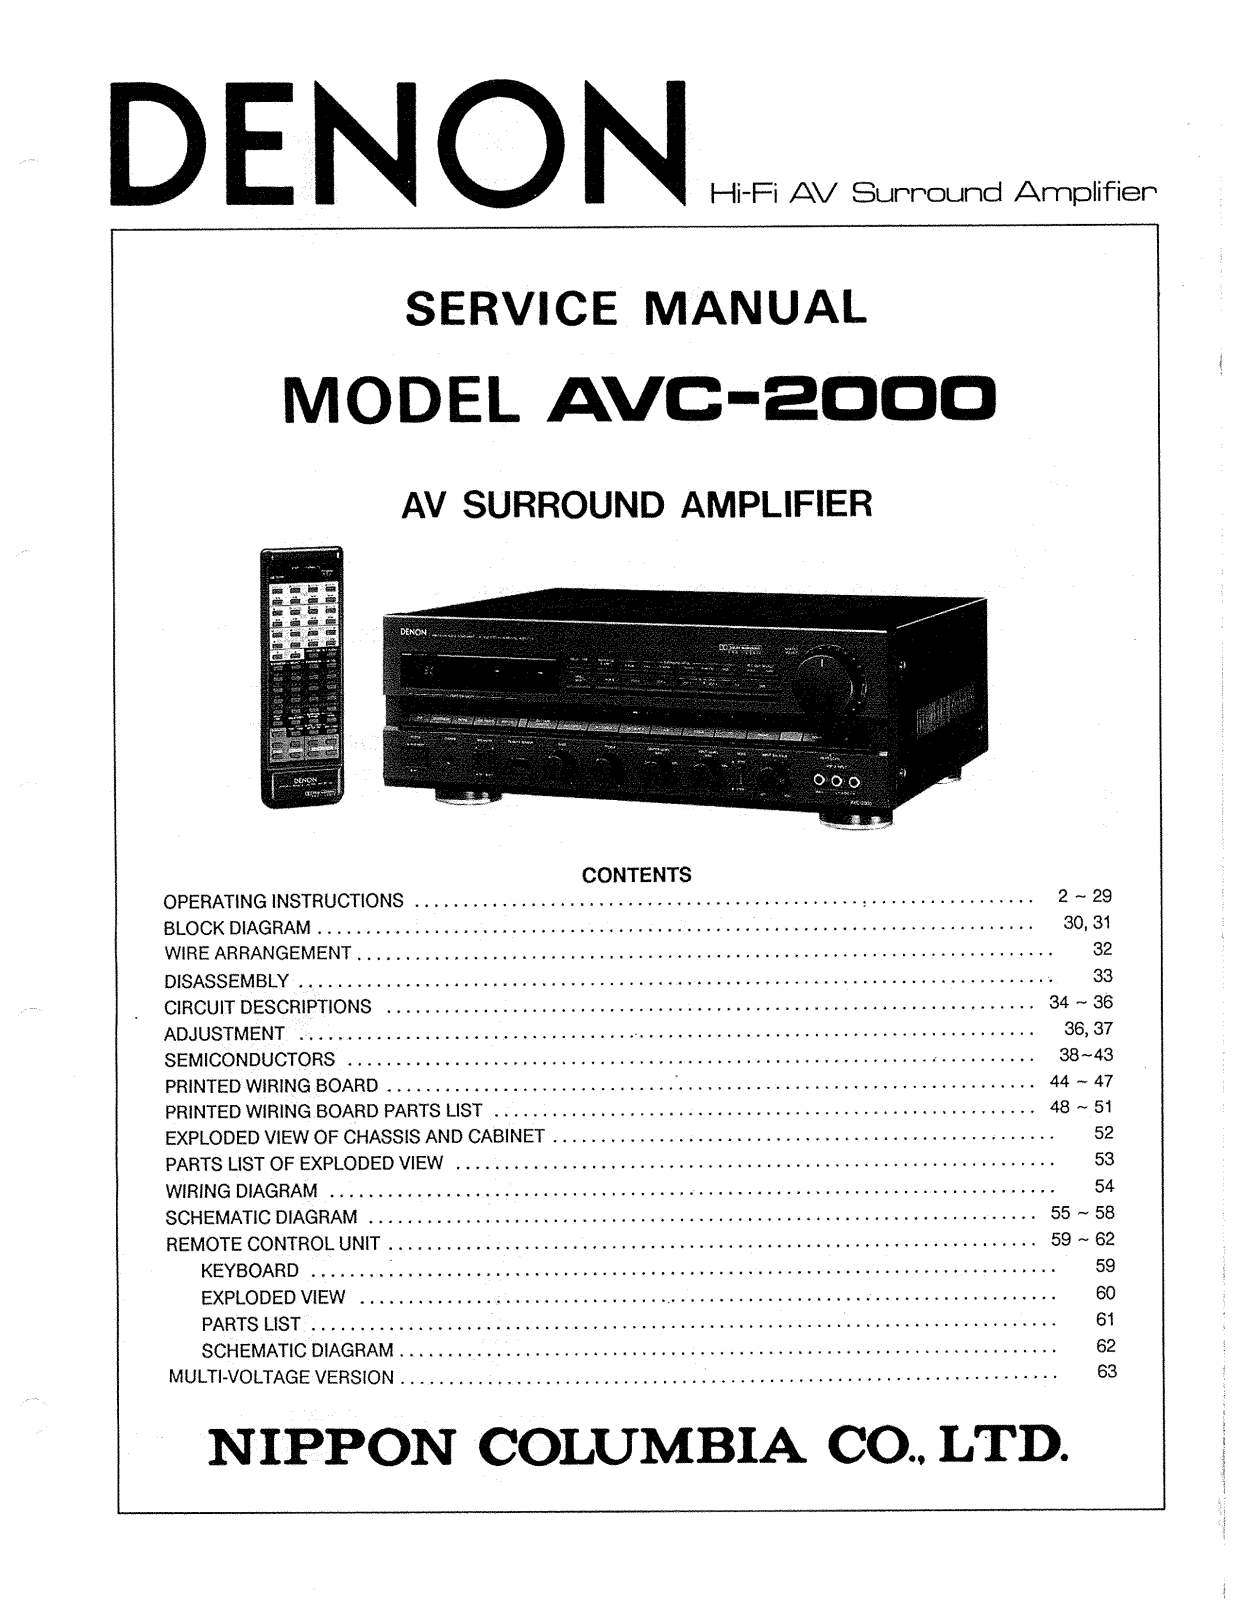 Denon AVC-2000 Service Manual